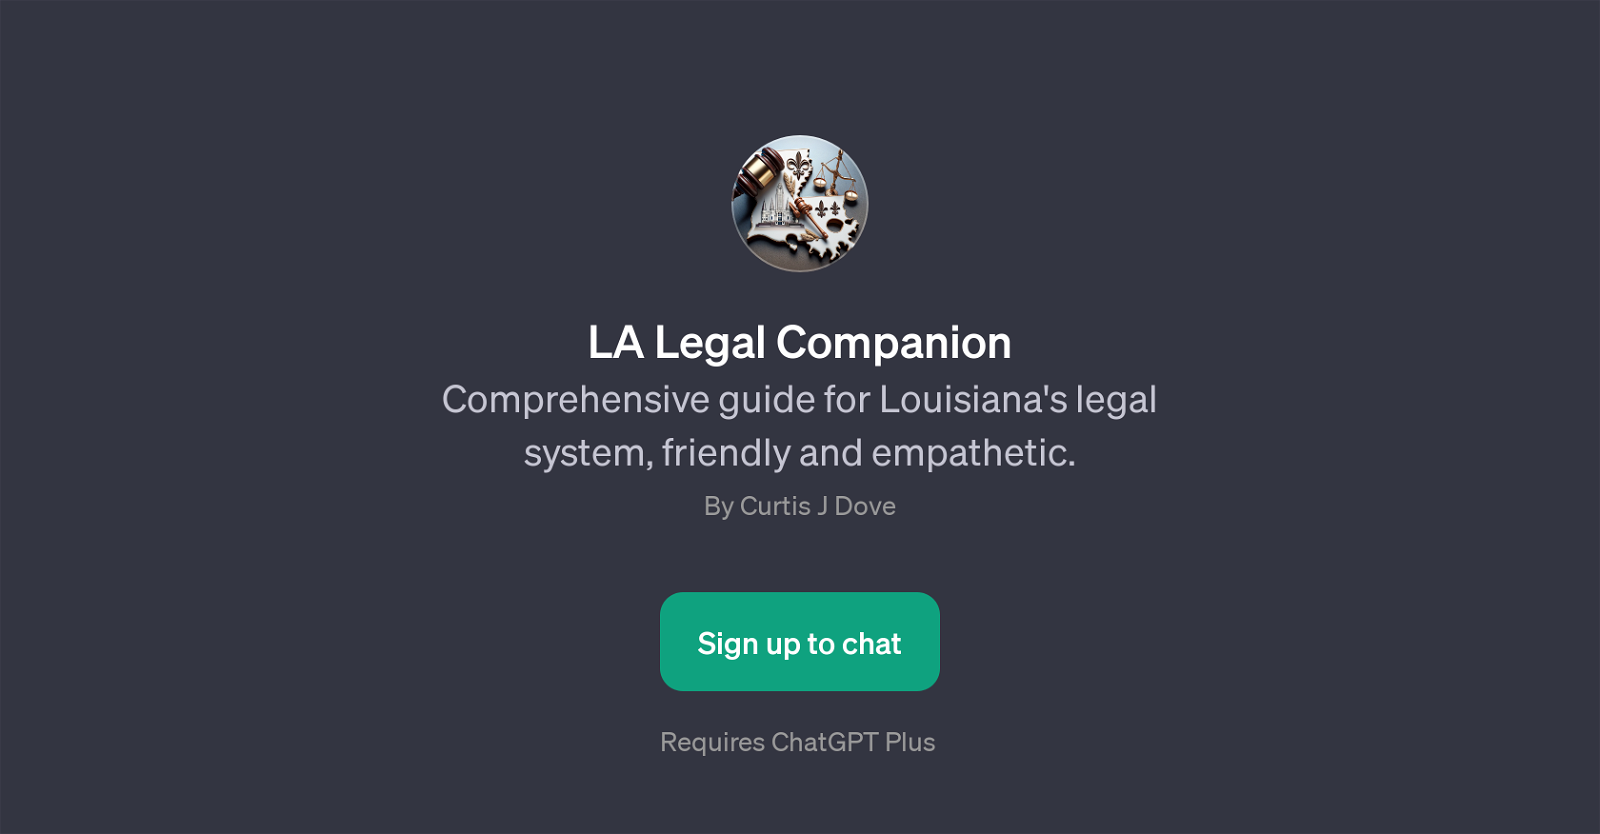 LA Legal Companion website